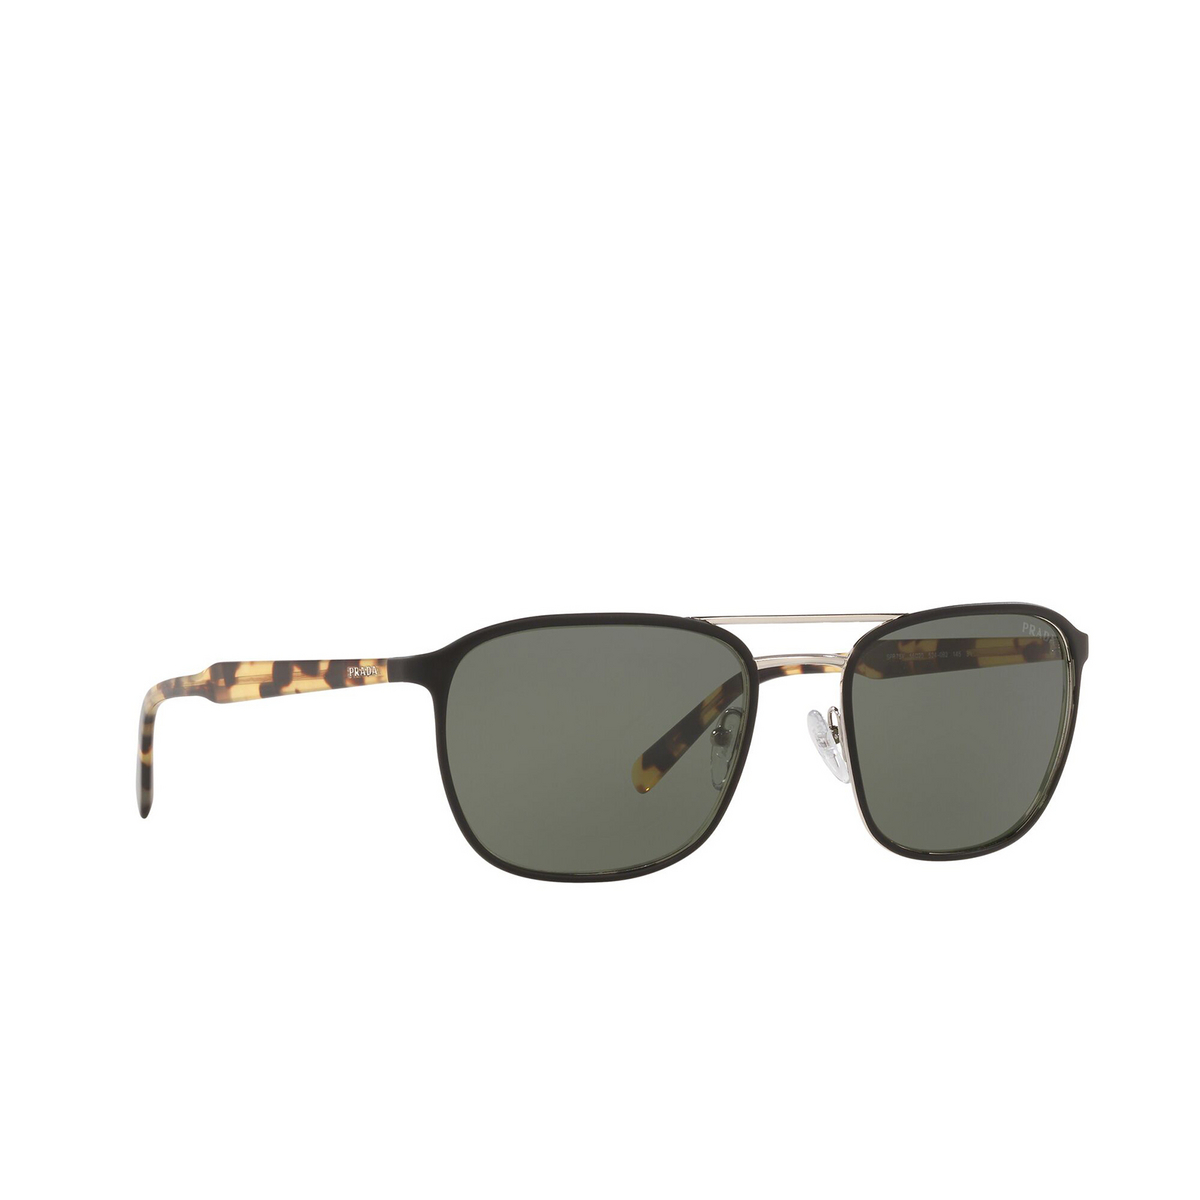 Prada CONCEPTUAL Sunglasses 5240B2 Top Matte Black on Silver - three-quarters view